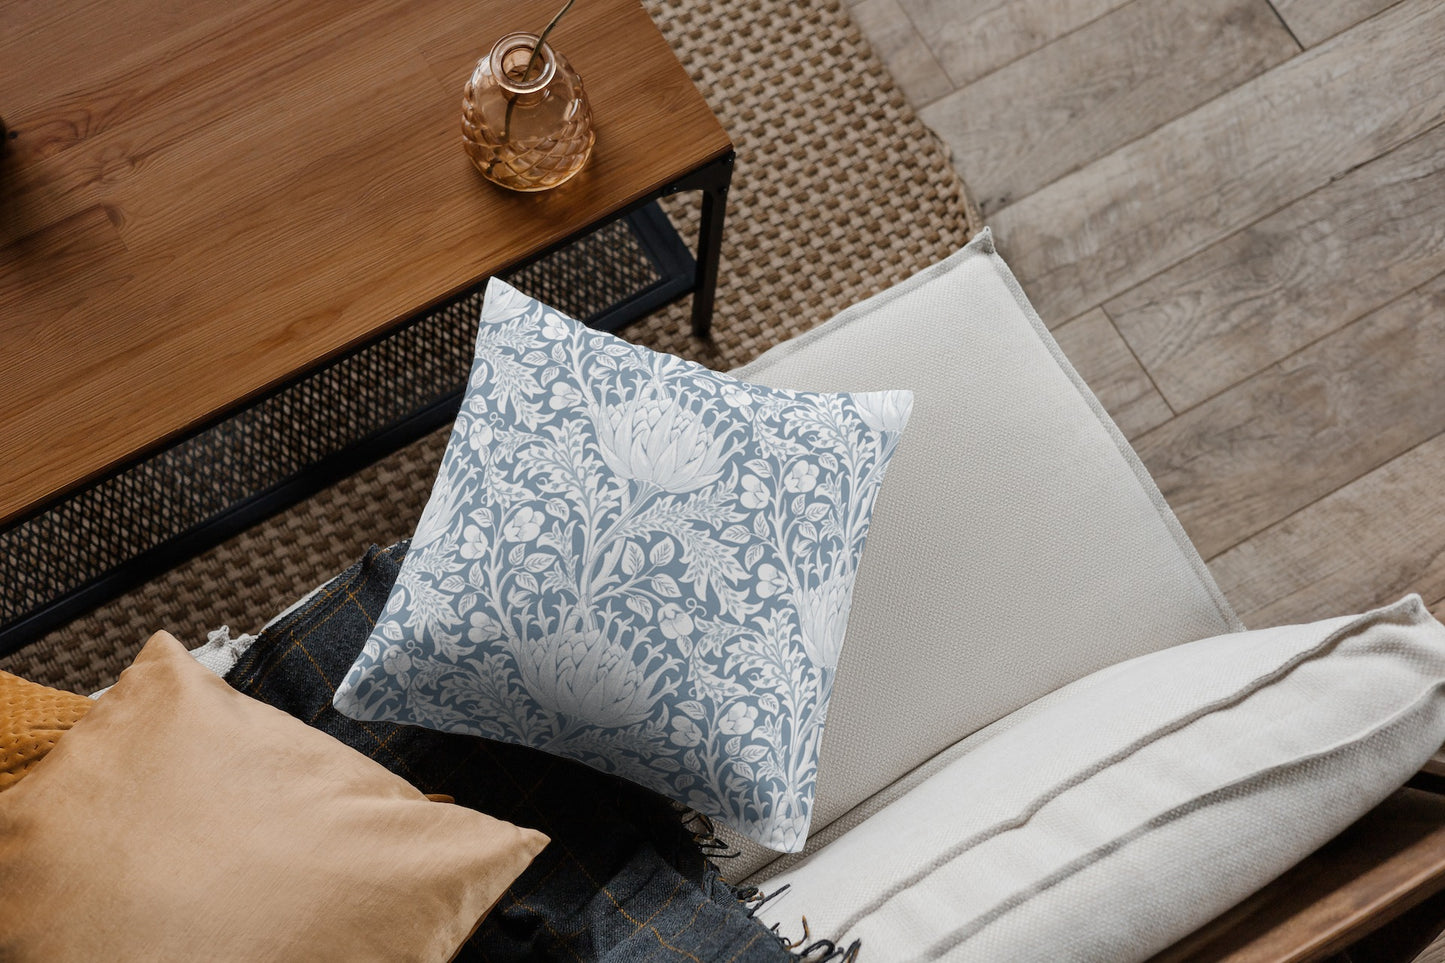 Provence Outdoor Pillows William Morris Artichoke Blue White